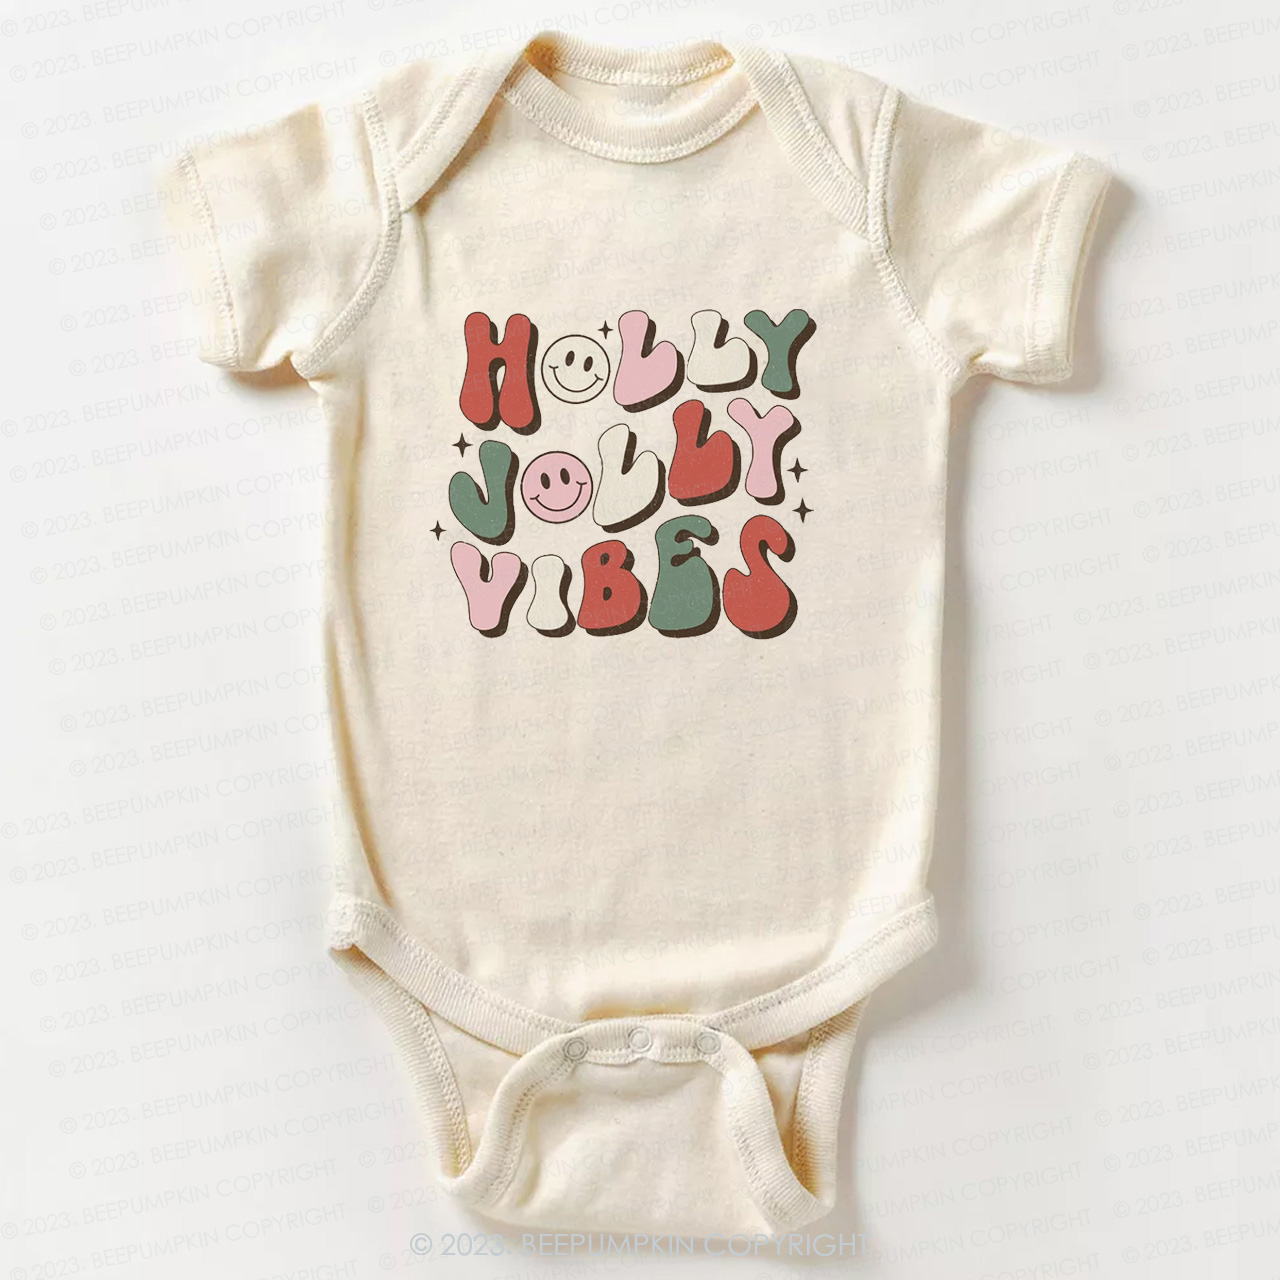 Holly Jolly Vibes Retro Christmas Bodysuit For Baby Beepumpkin